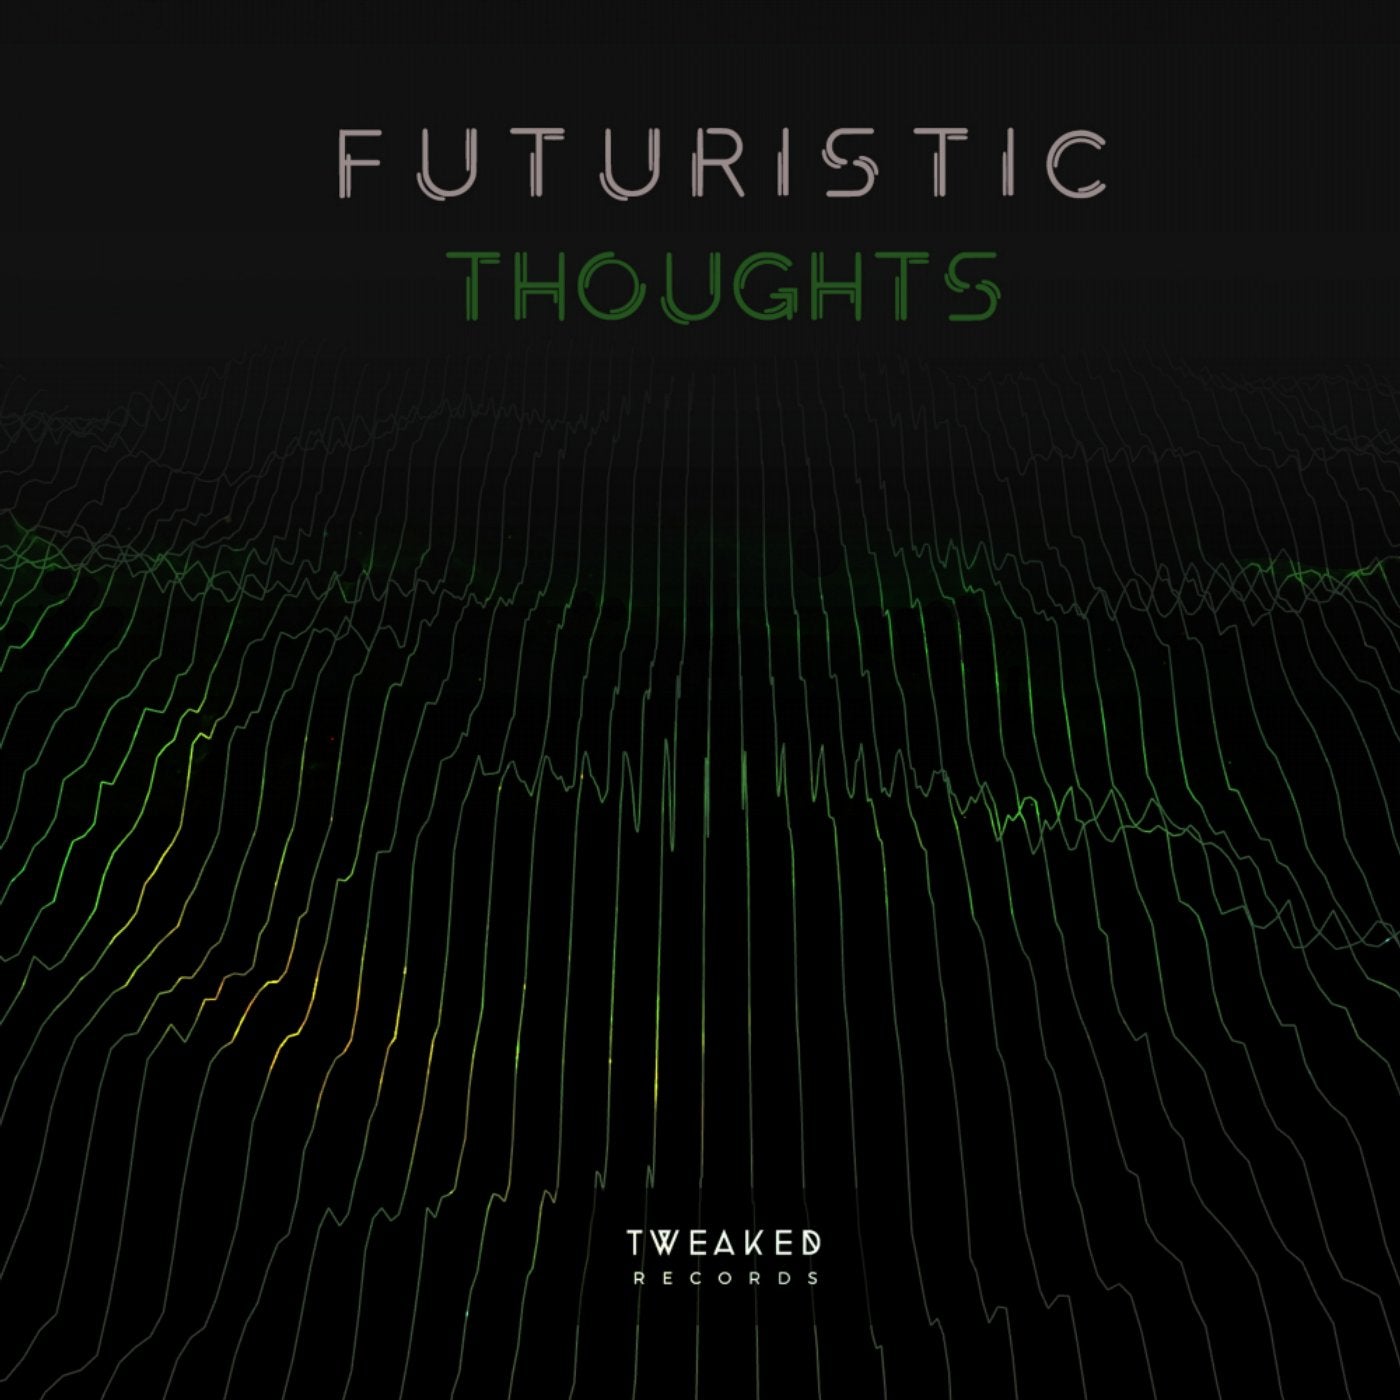 Futuristic Thoughts